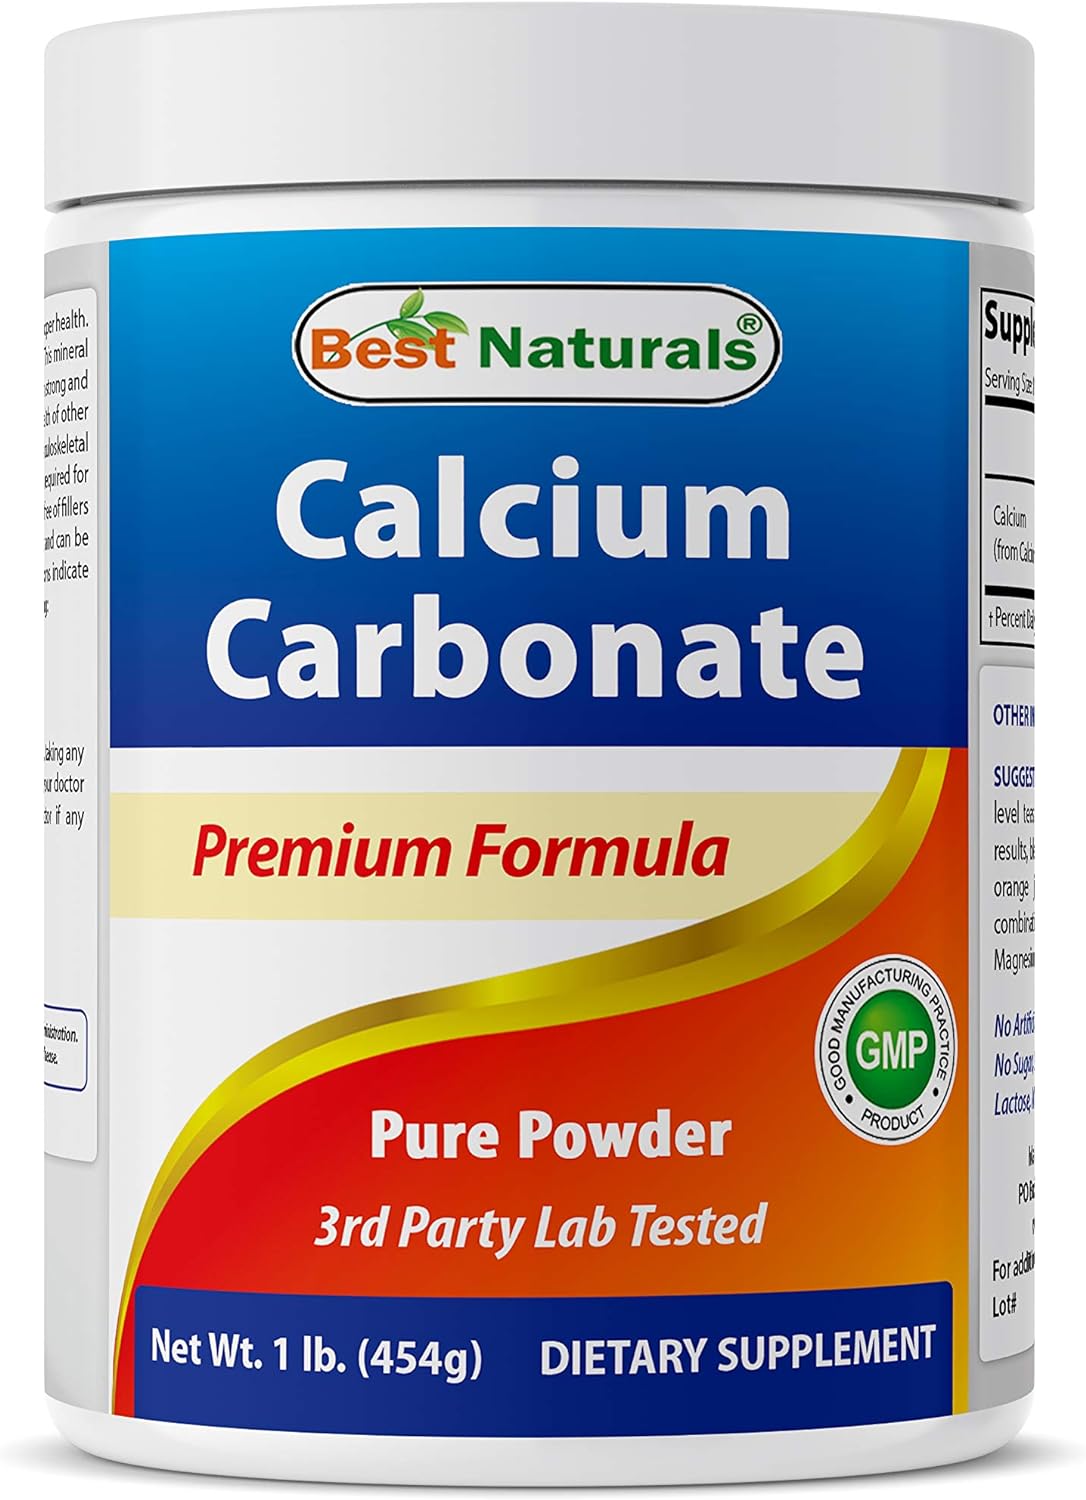 Best Naturals Calcium Carbonate Powder 1 Pound - Food Grade (16 OZ (Pack of 1))